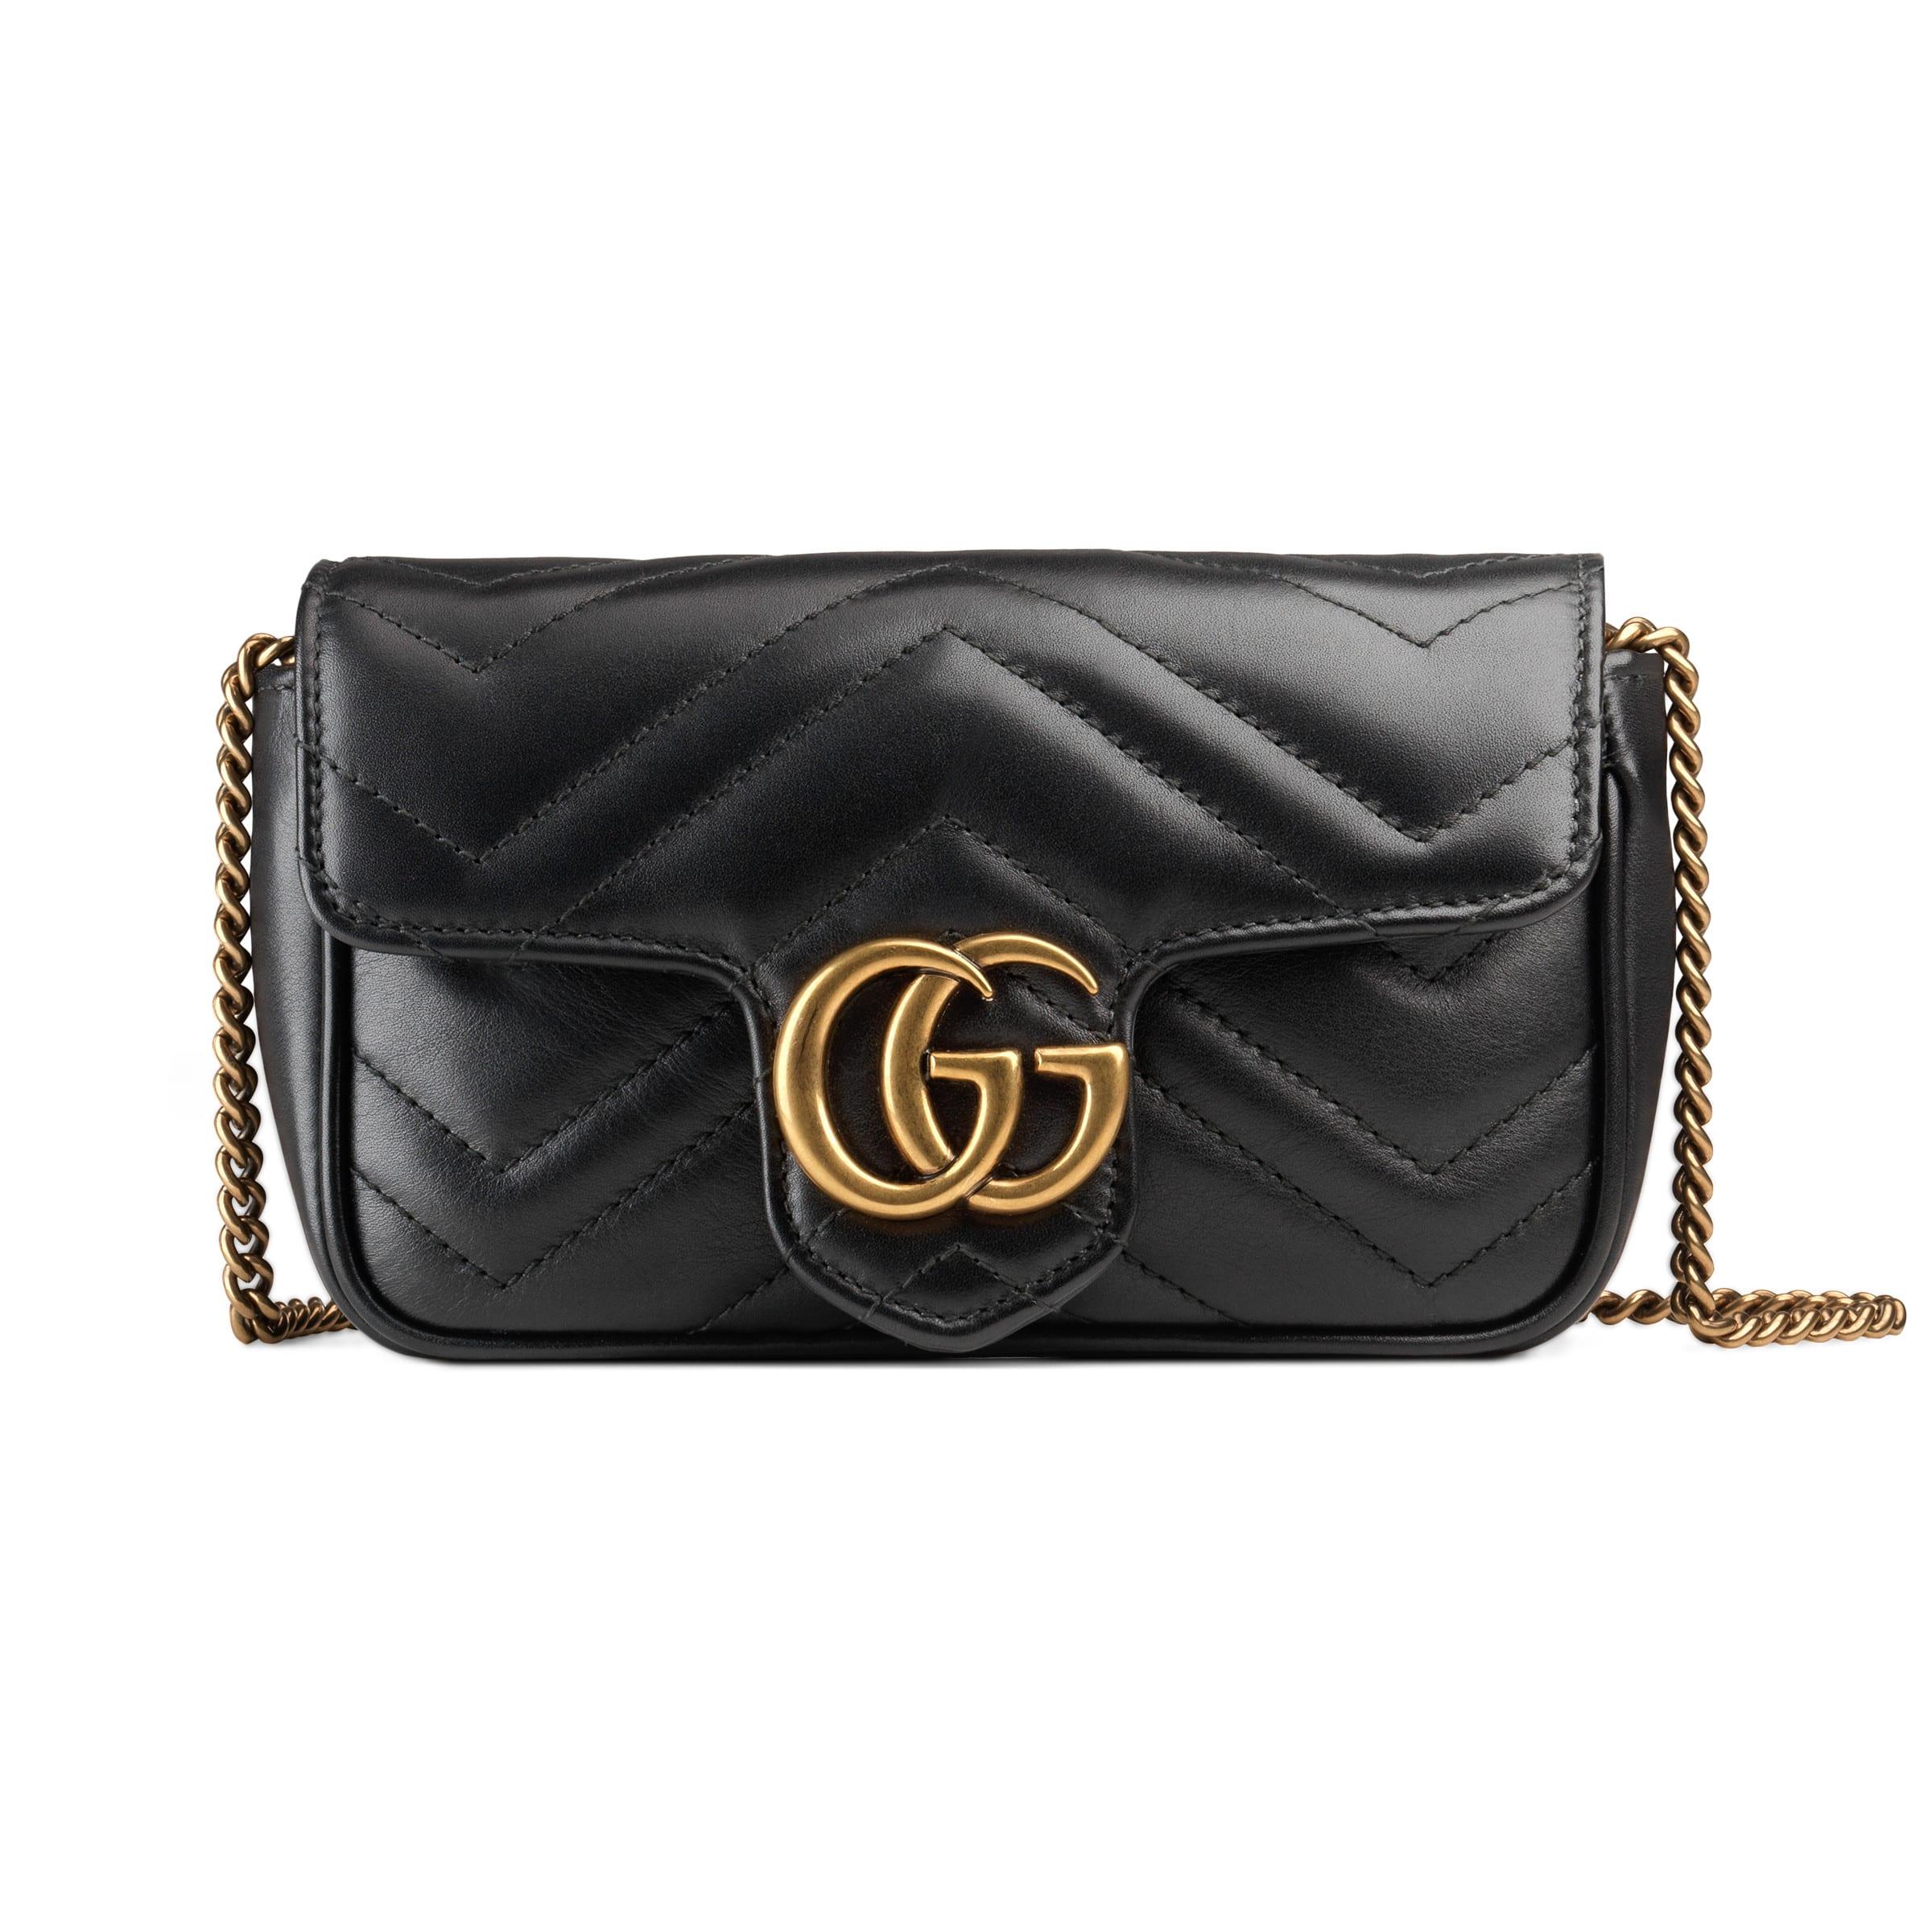 Gucci GG Marmont Matelassé Leather Super Mini Bag in Black - Save 54% - Lyst